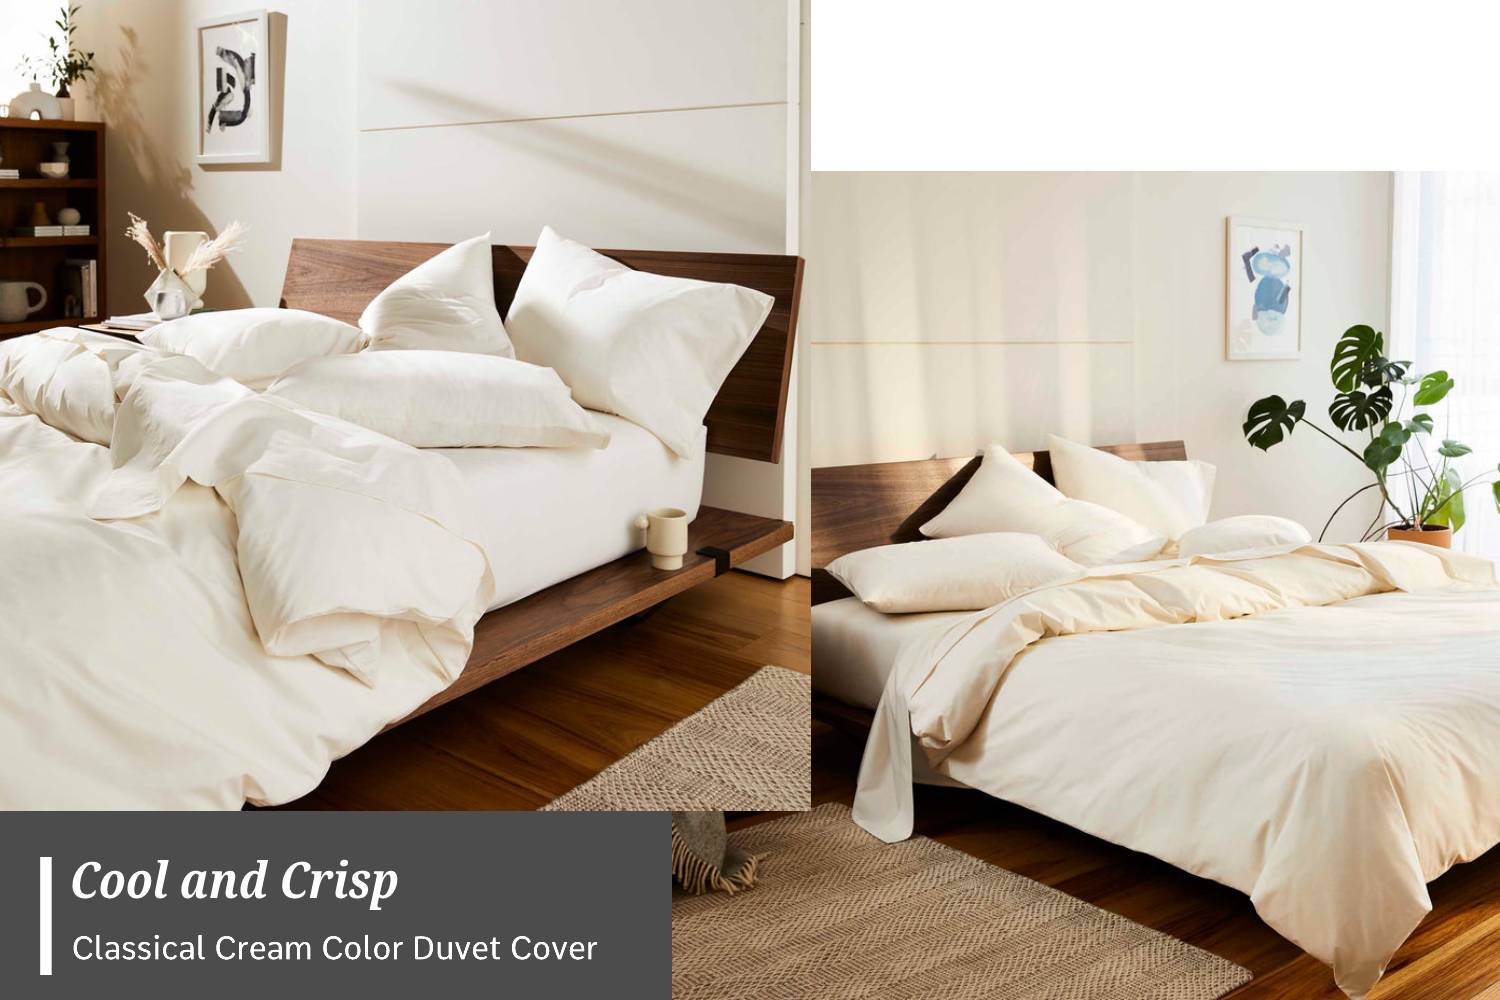 Cool and crisp: Classical cream color duvet cover